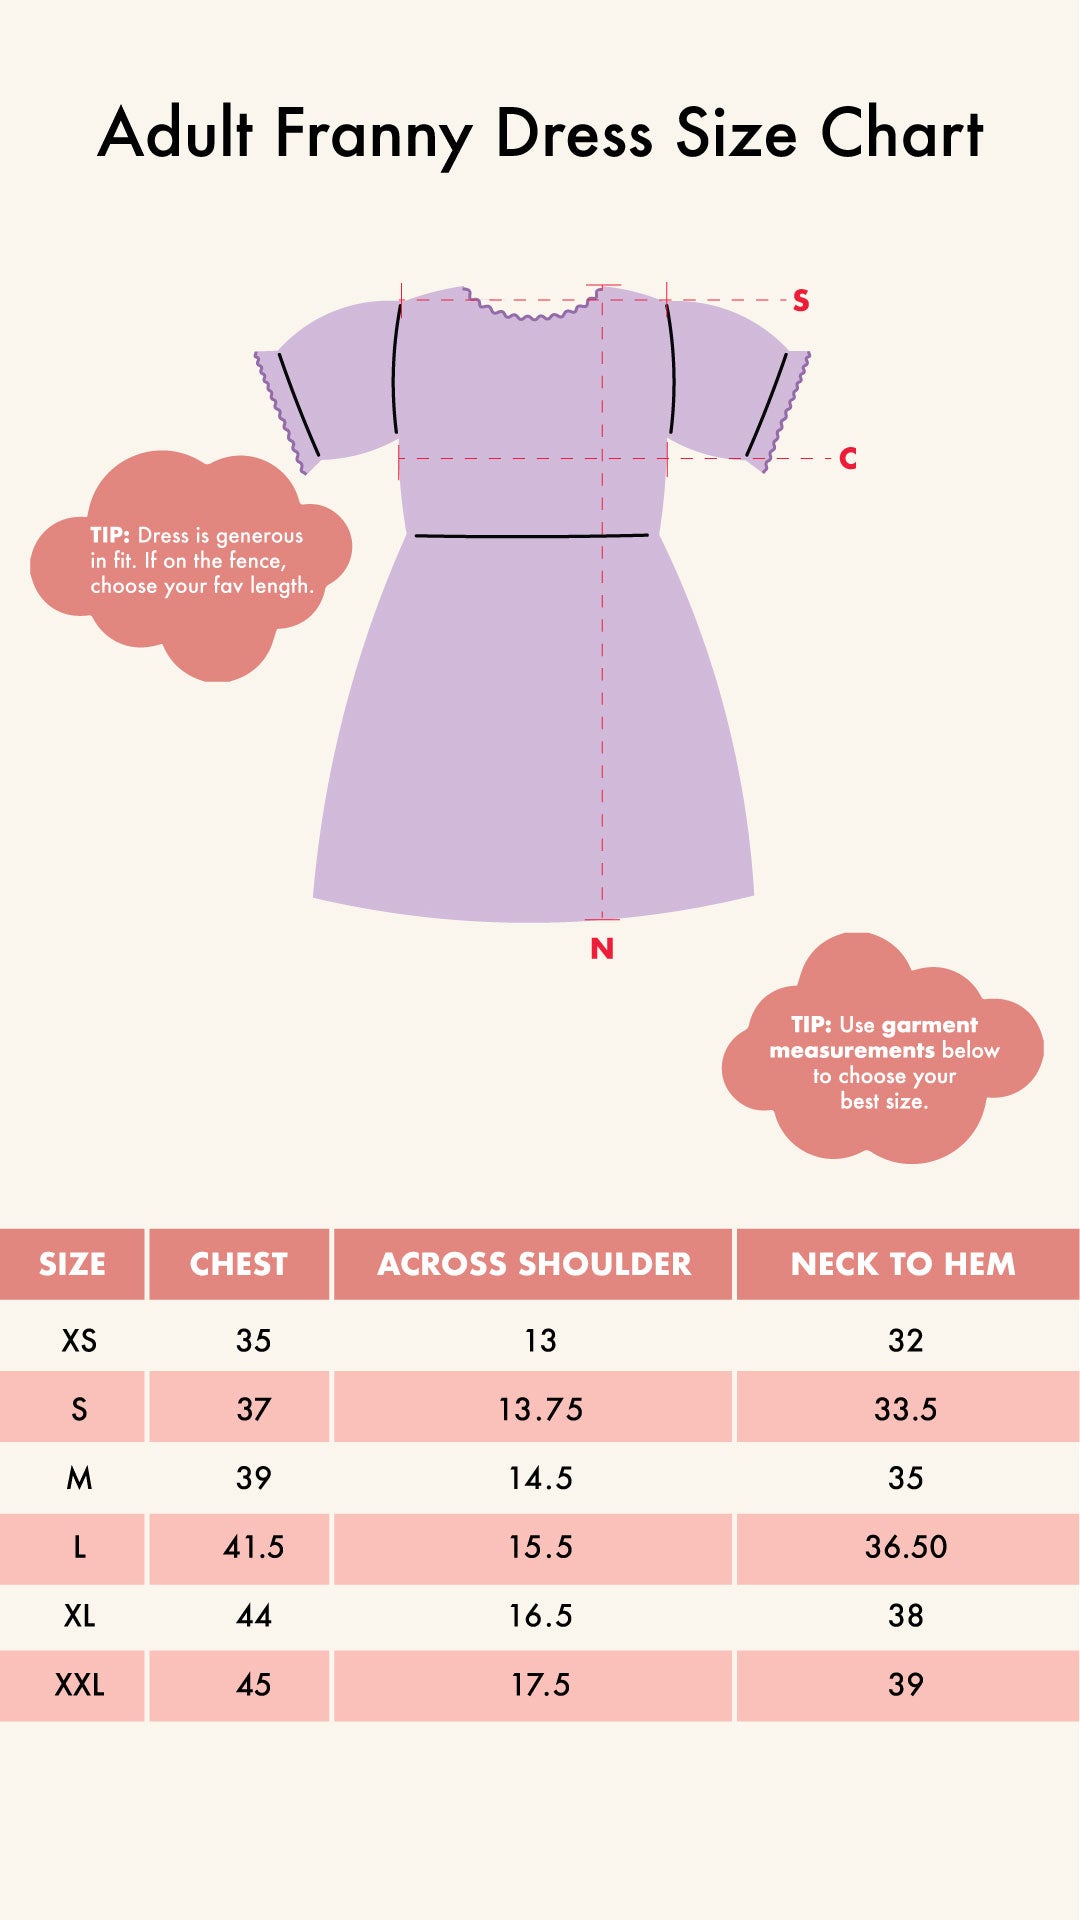 Adult Franny Dress Size Chart